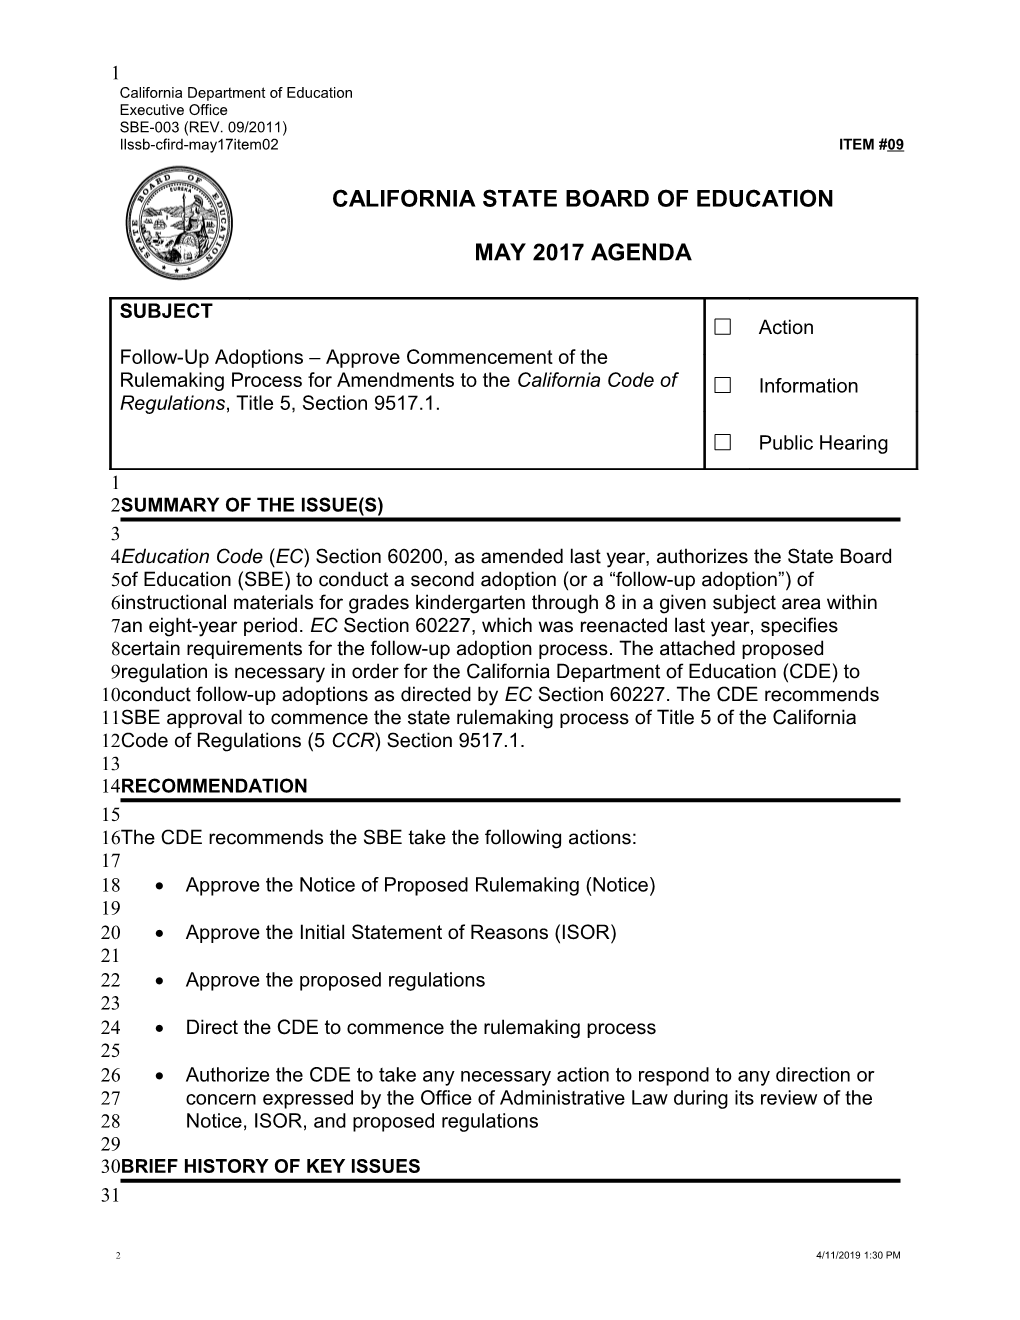 May 2017 Agenda Item 09 - Meeting Agendas (CA State Board of Education)